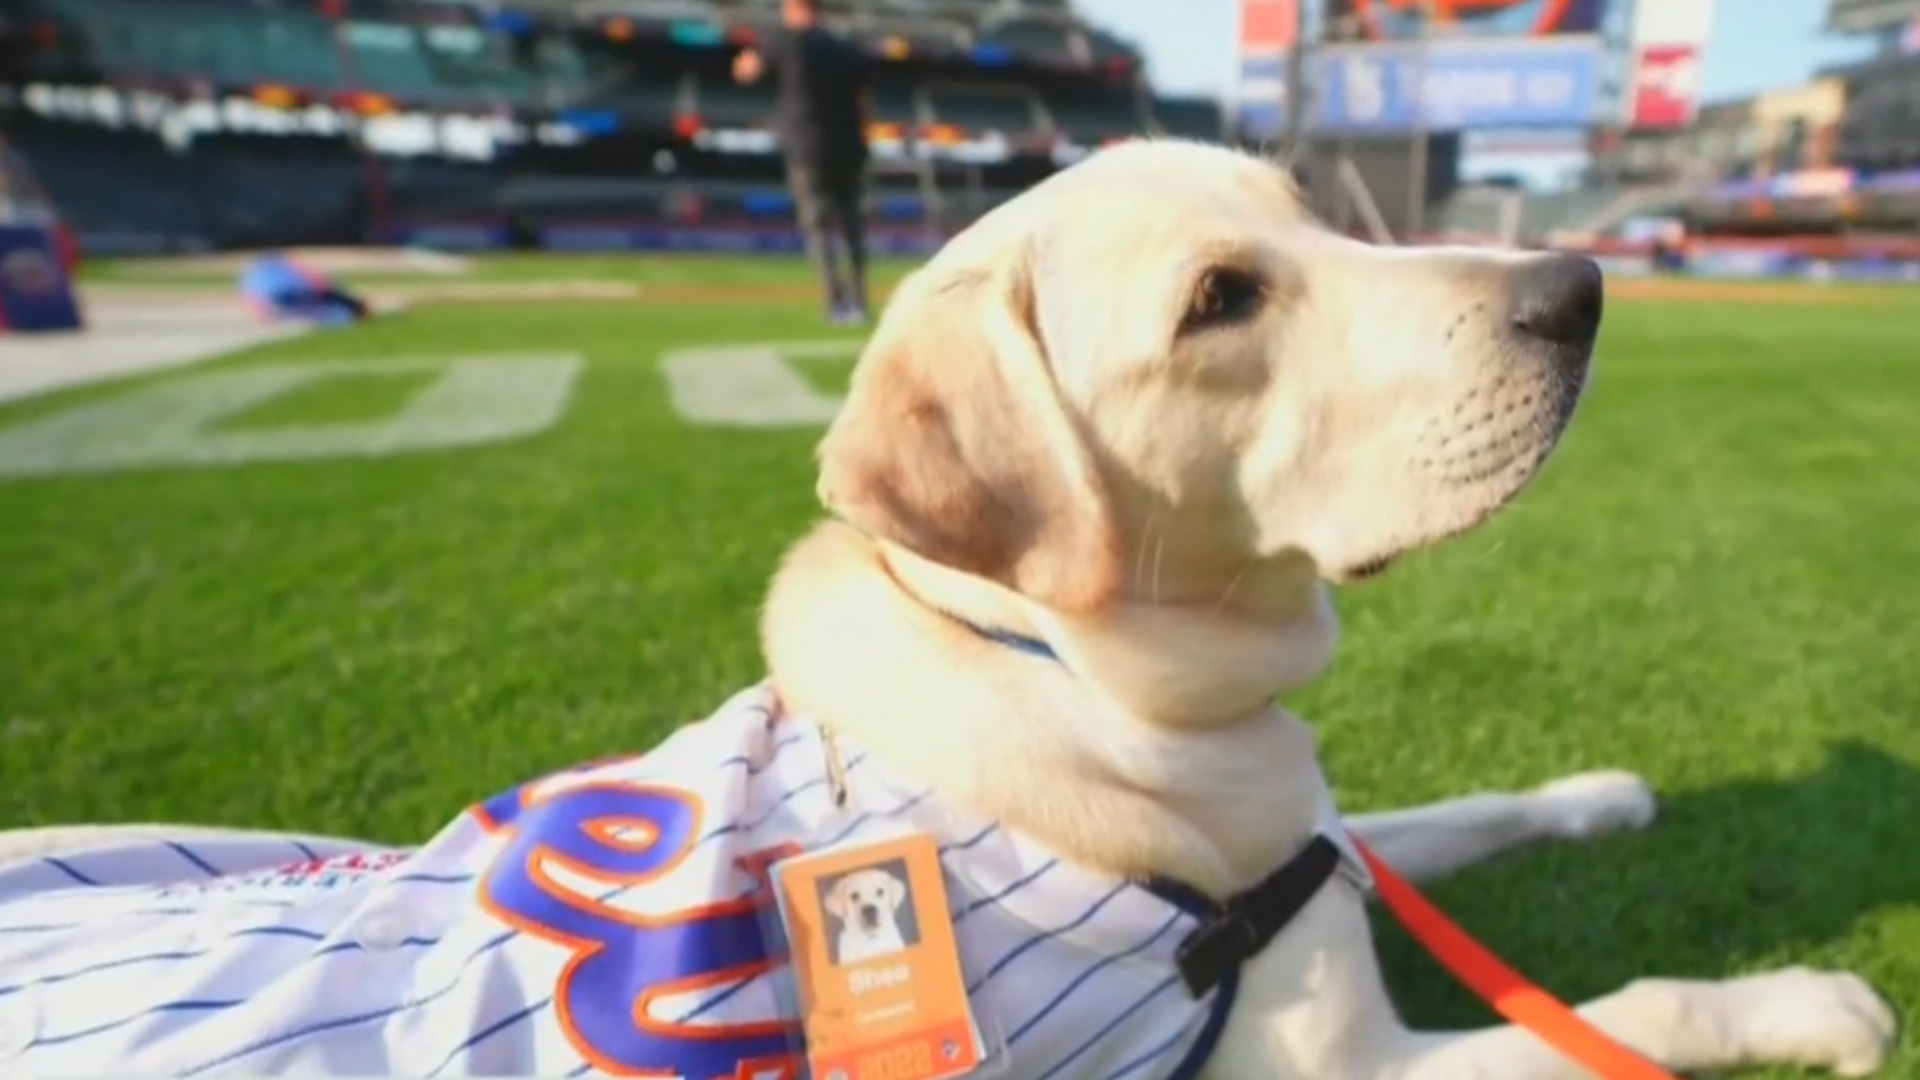 Watch CBS Evening News: Future service dog trains with New York